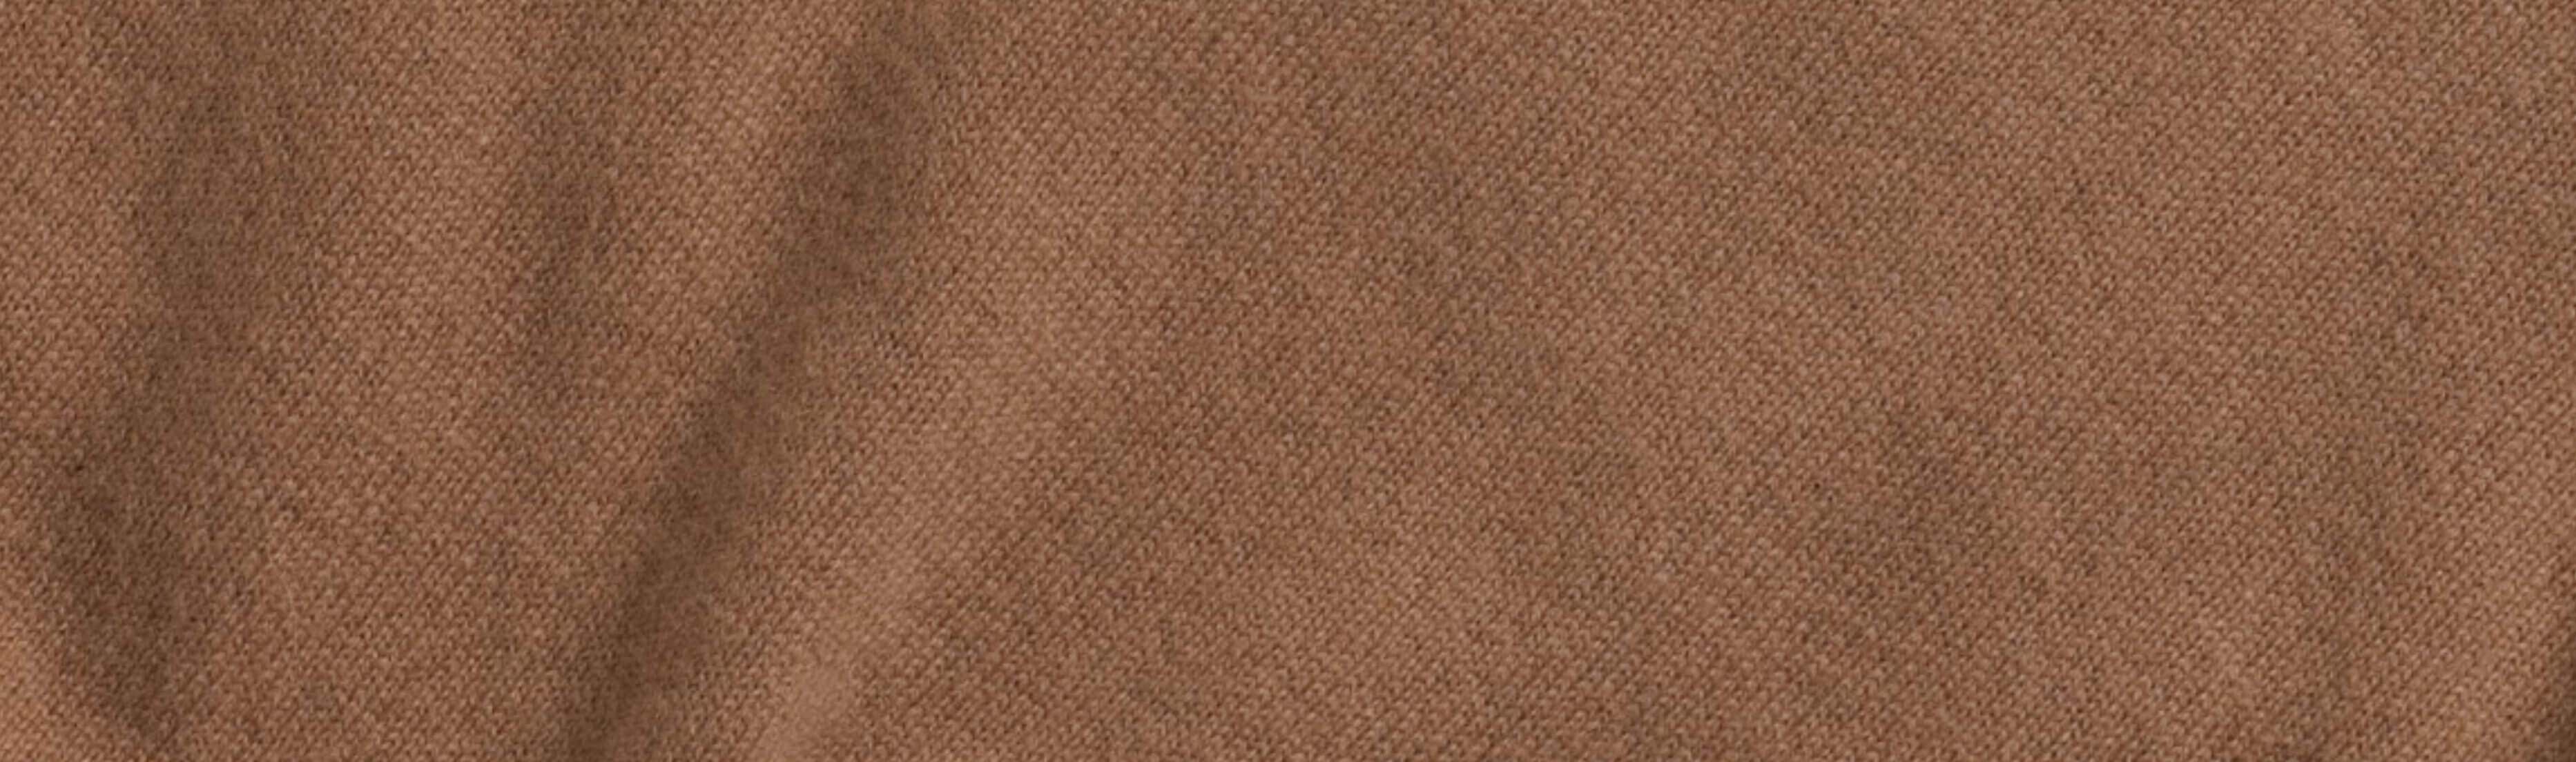 Close-up of a camel cashmere jumper.